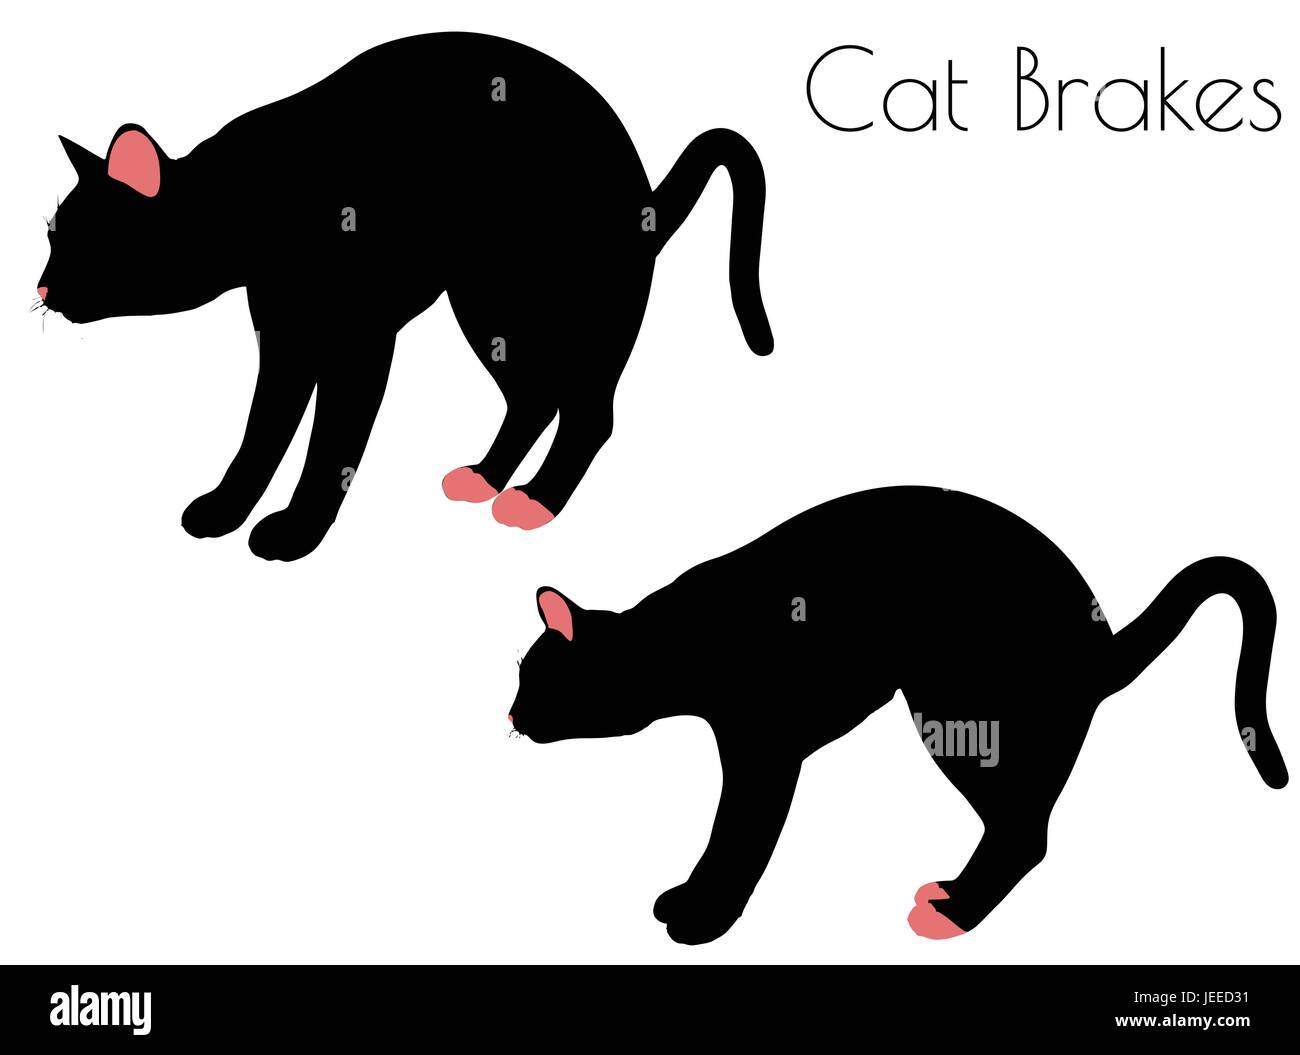 EPS 10 vector illustration of cat silhouette in Brake Pose Stock Vector